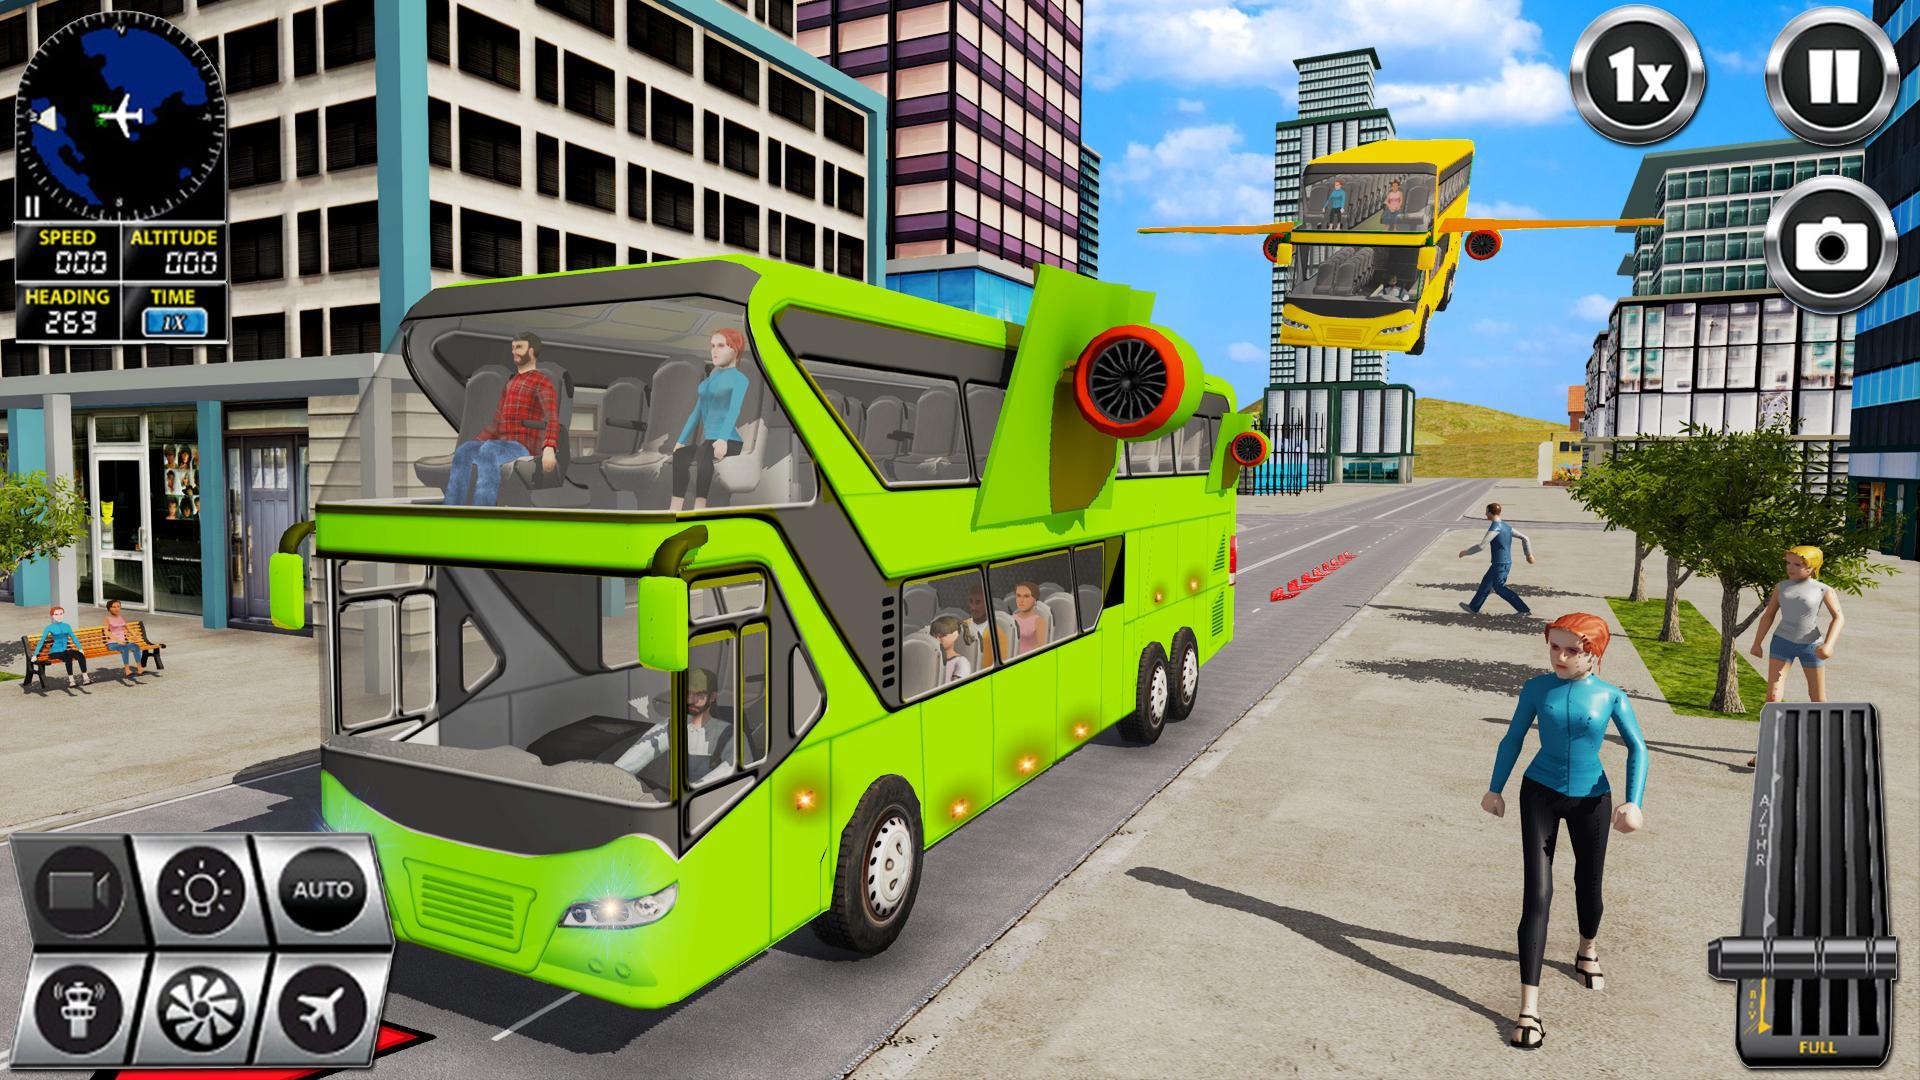 Flying Bus Driving simulator 2019: Free Bus Games 2.8 Screenshot 10